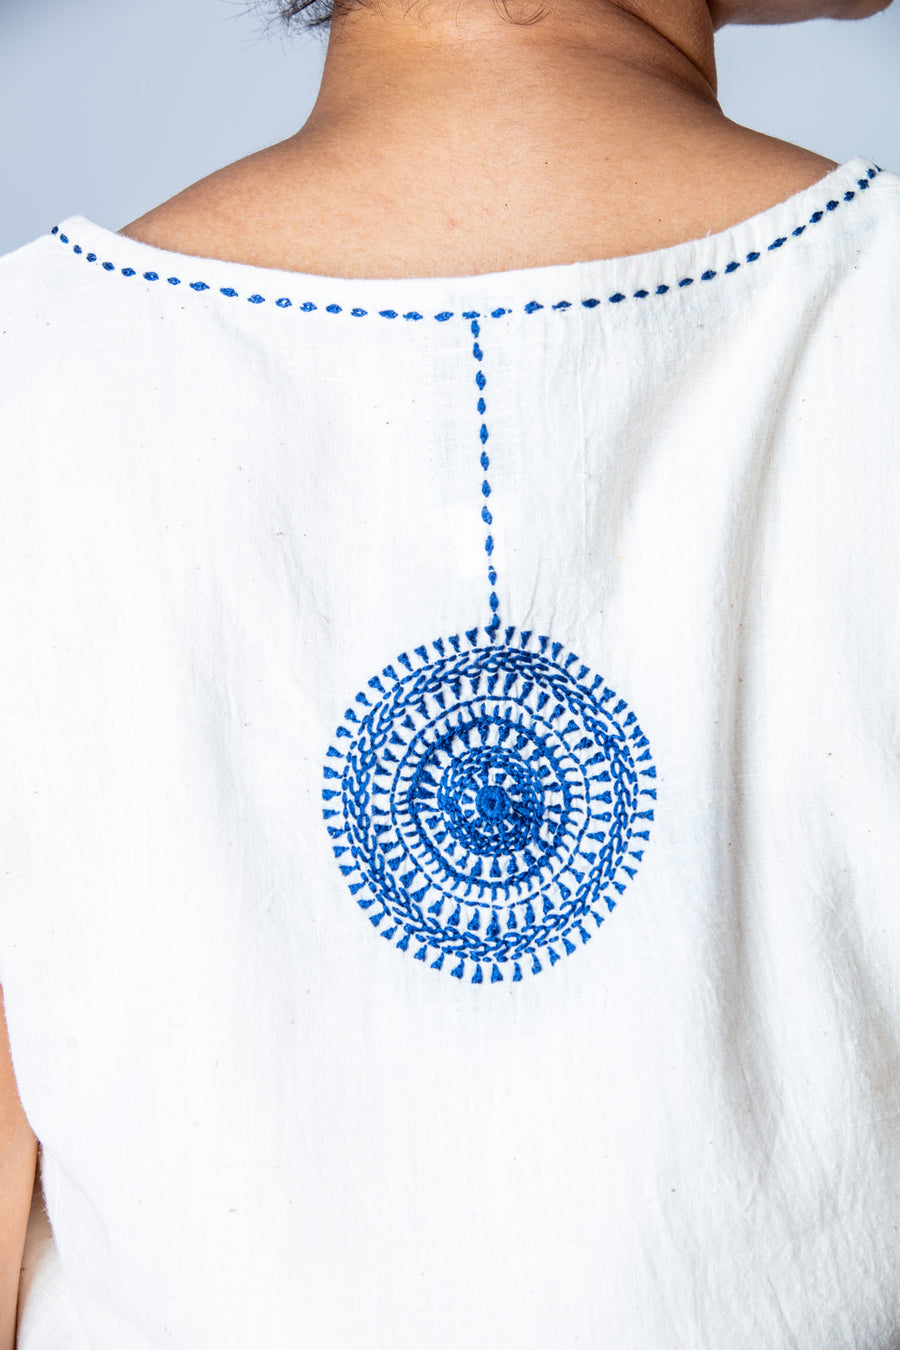 Off white Desi Cotton Embroidered Top - SIMPLE - Upasana Design Studio